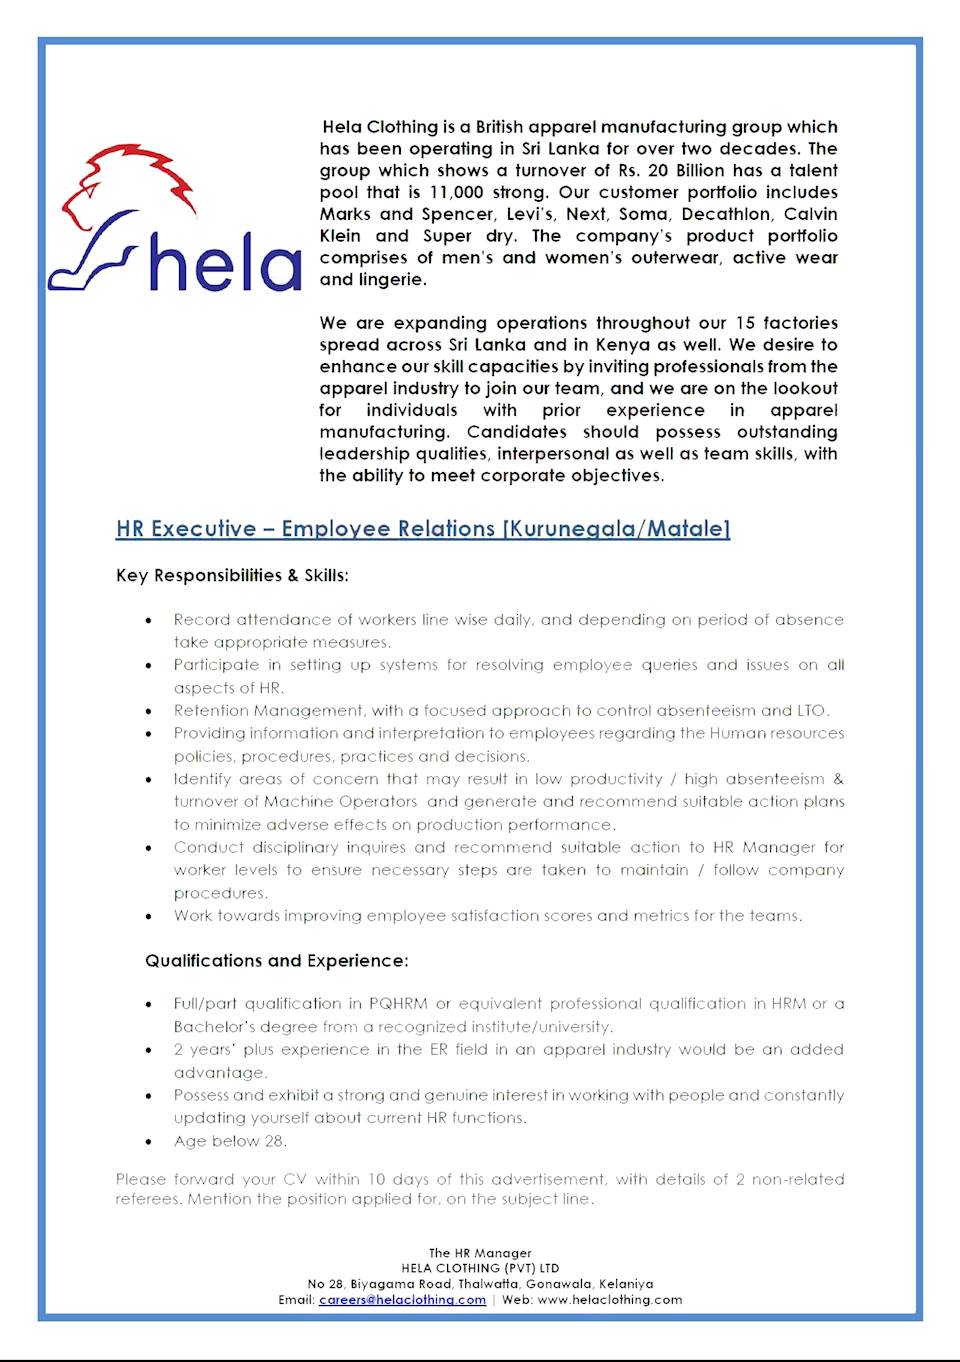 HR Executive - Employee Relations (Kurunegala / Matale)